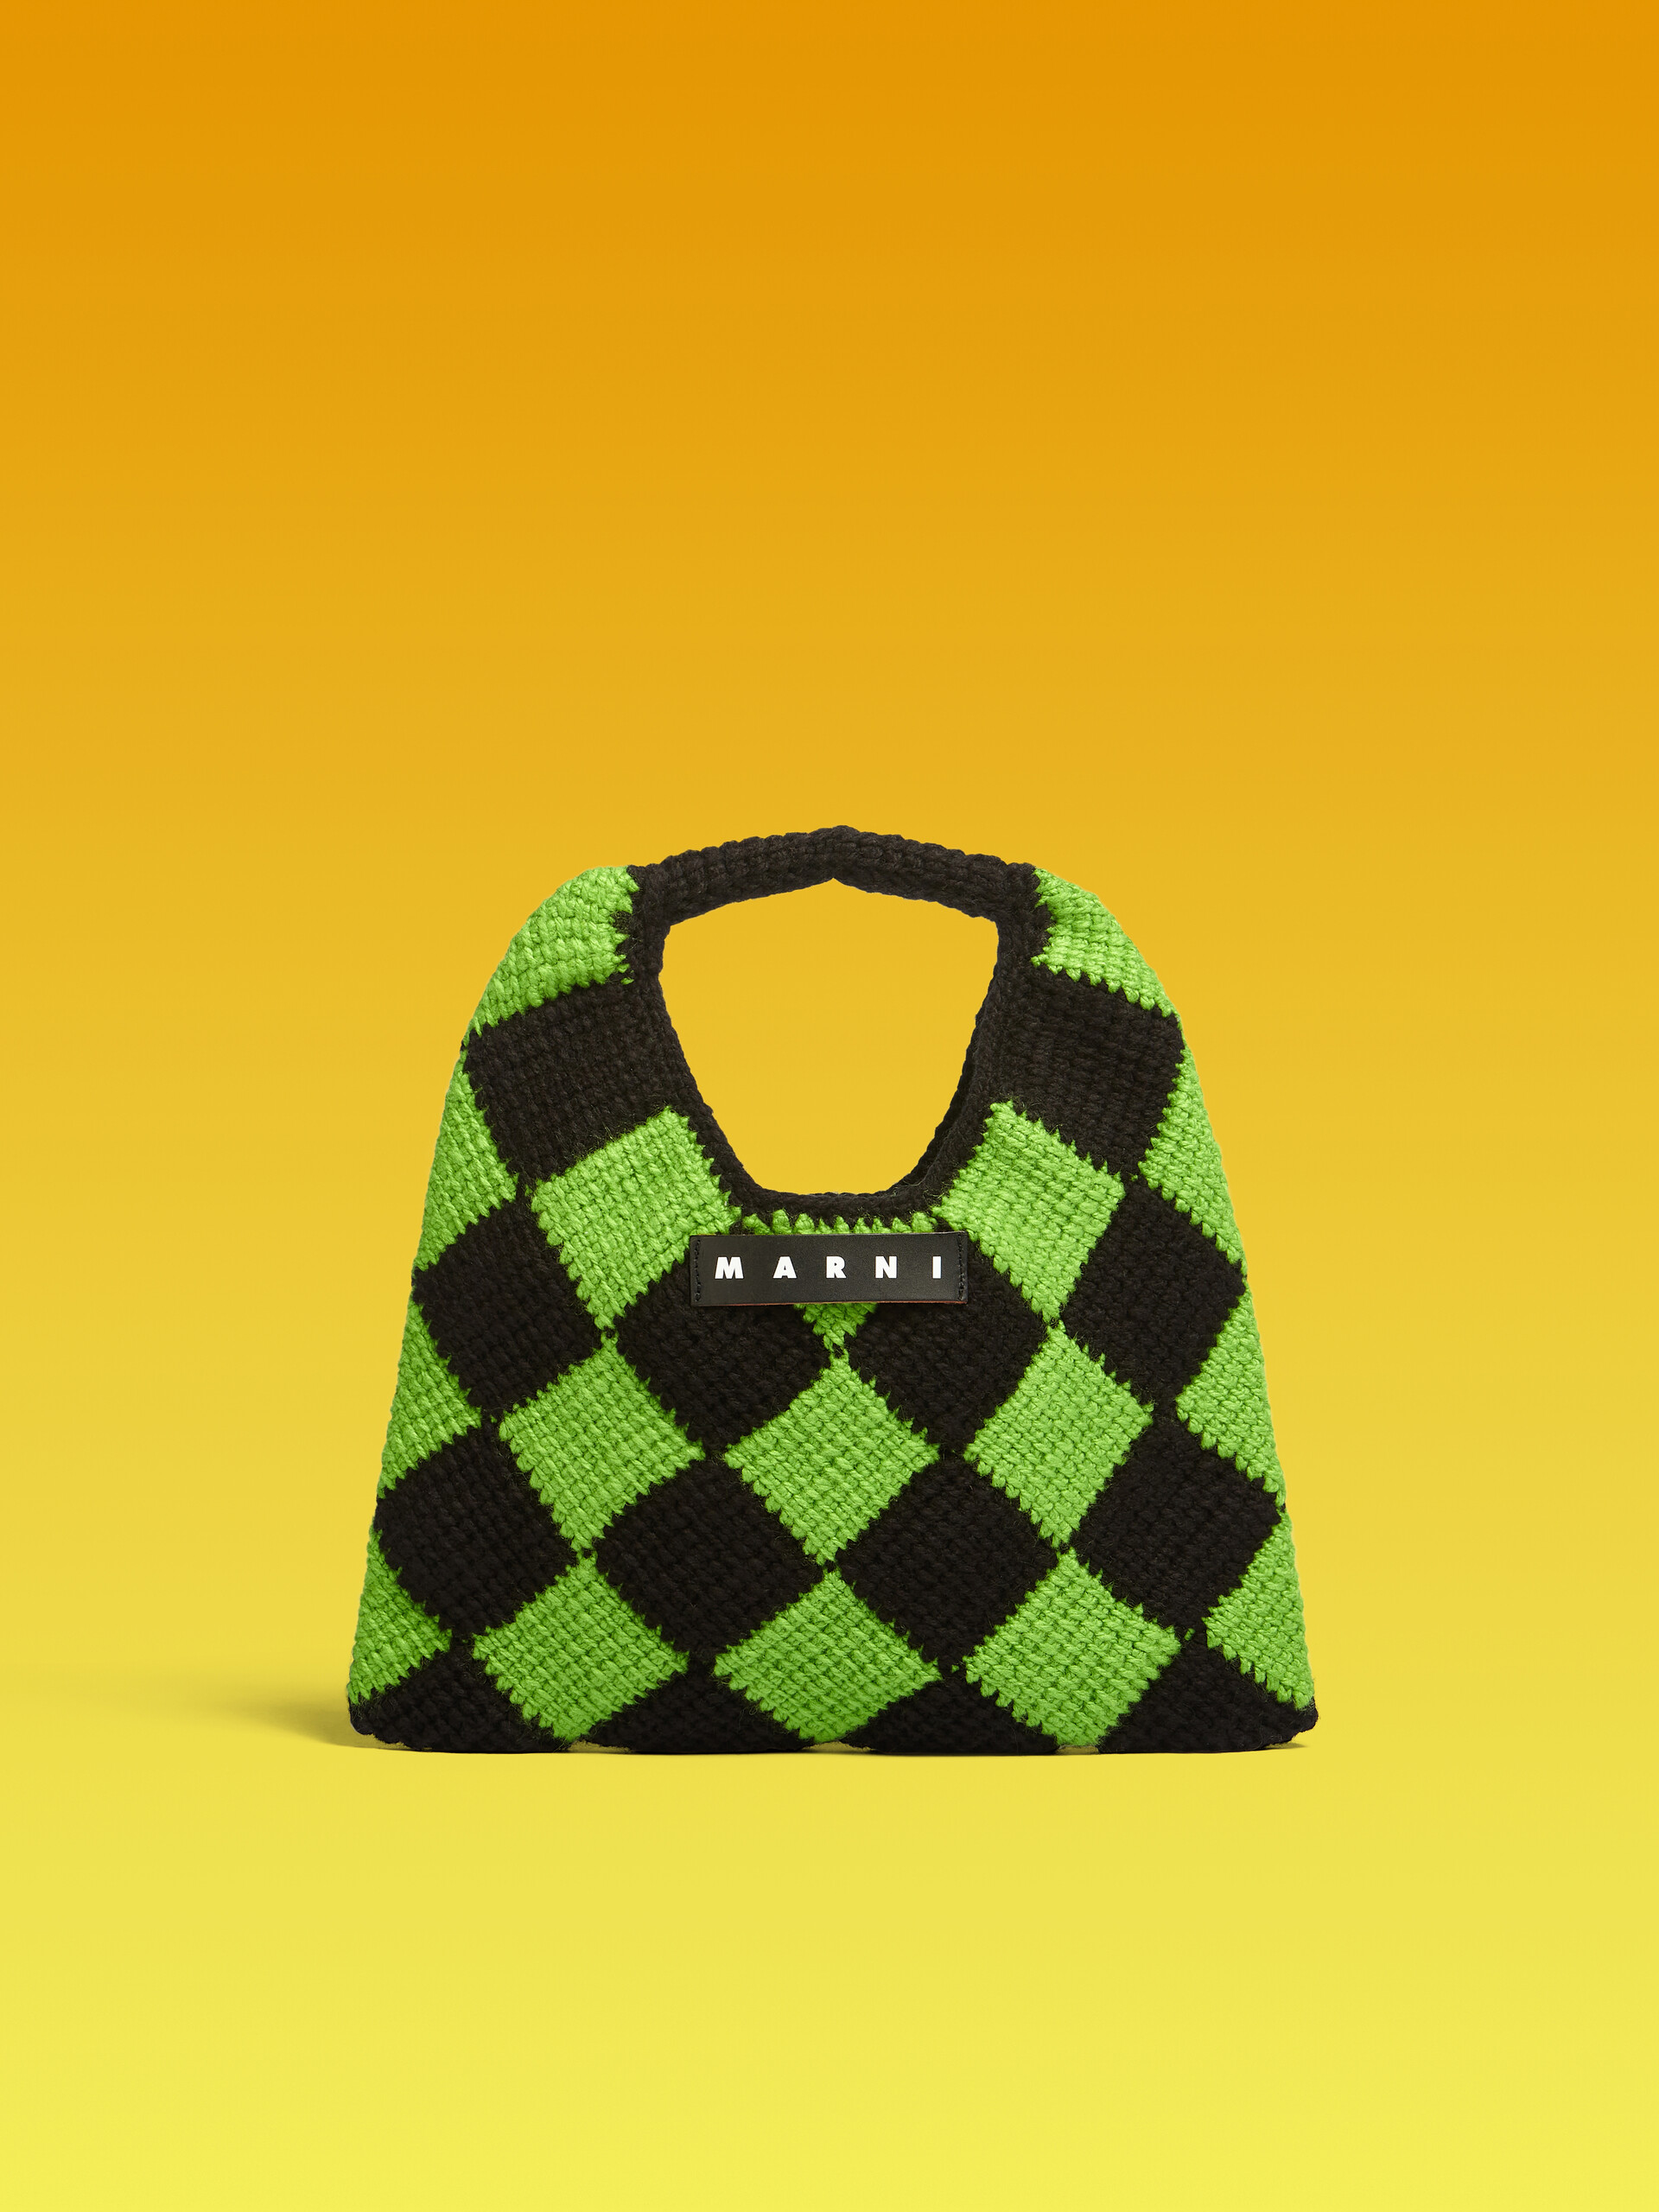 MARNI MARKET DIAMOND medium bag in green and black tech wool - Shopping Bags - Image 1